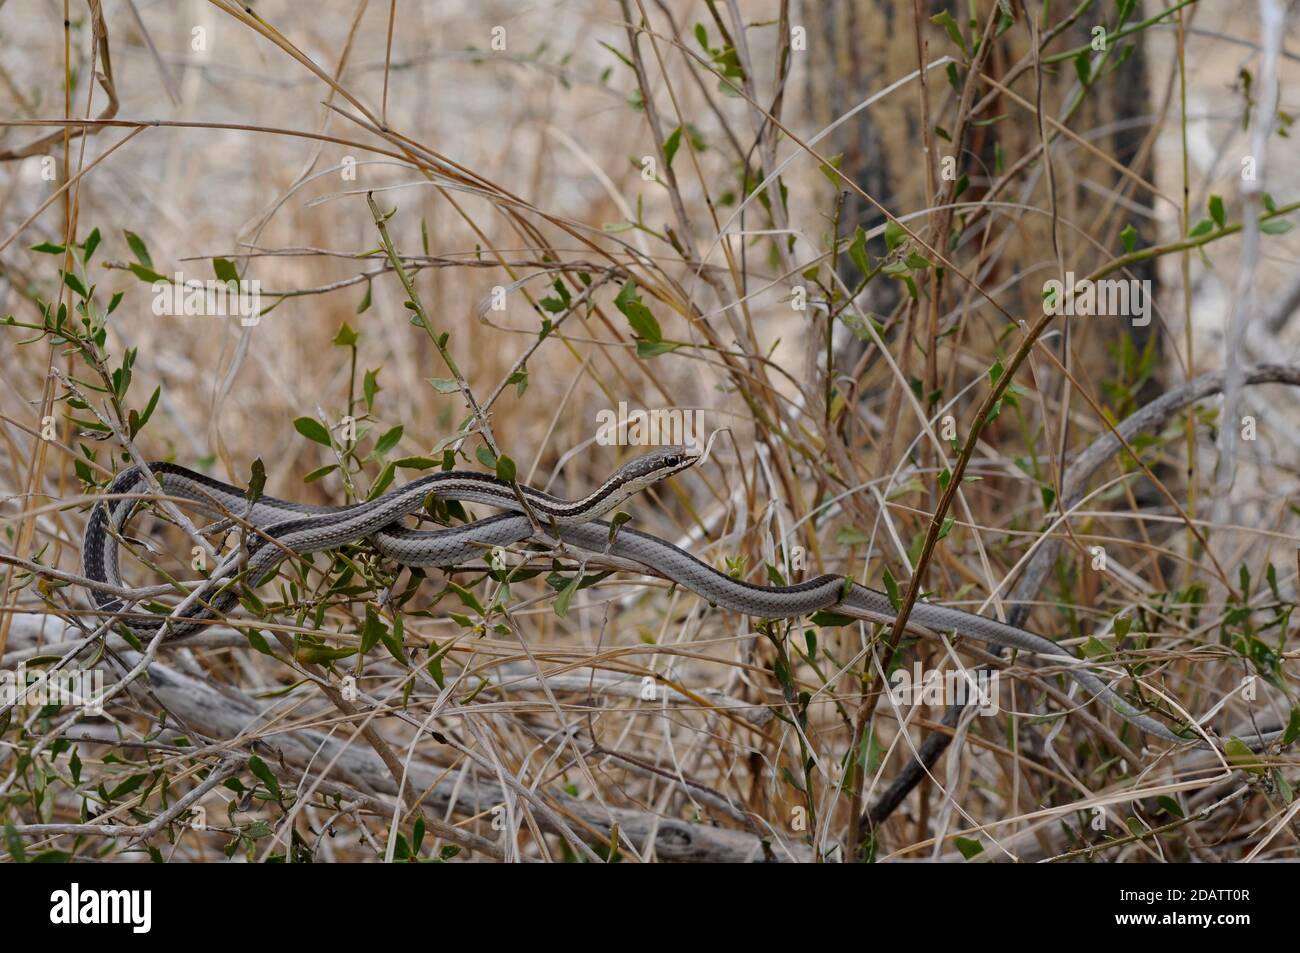 Bernier's Striped snake  blending in with branches in shrubs Stock Photo